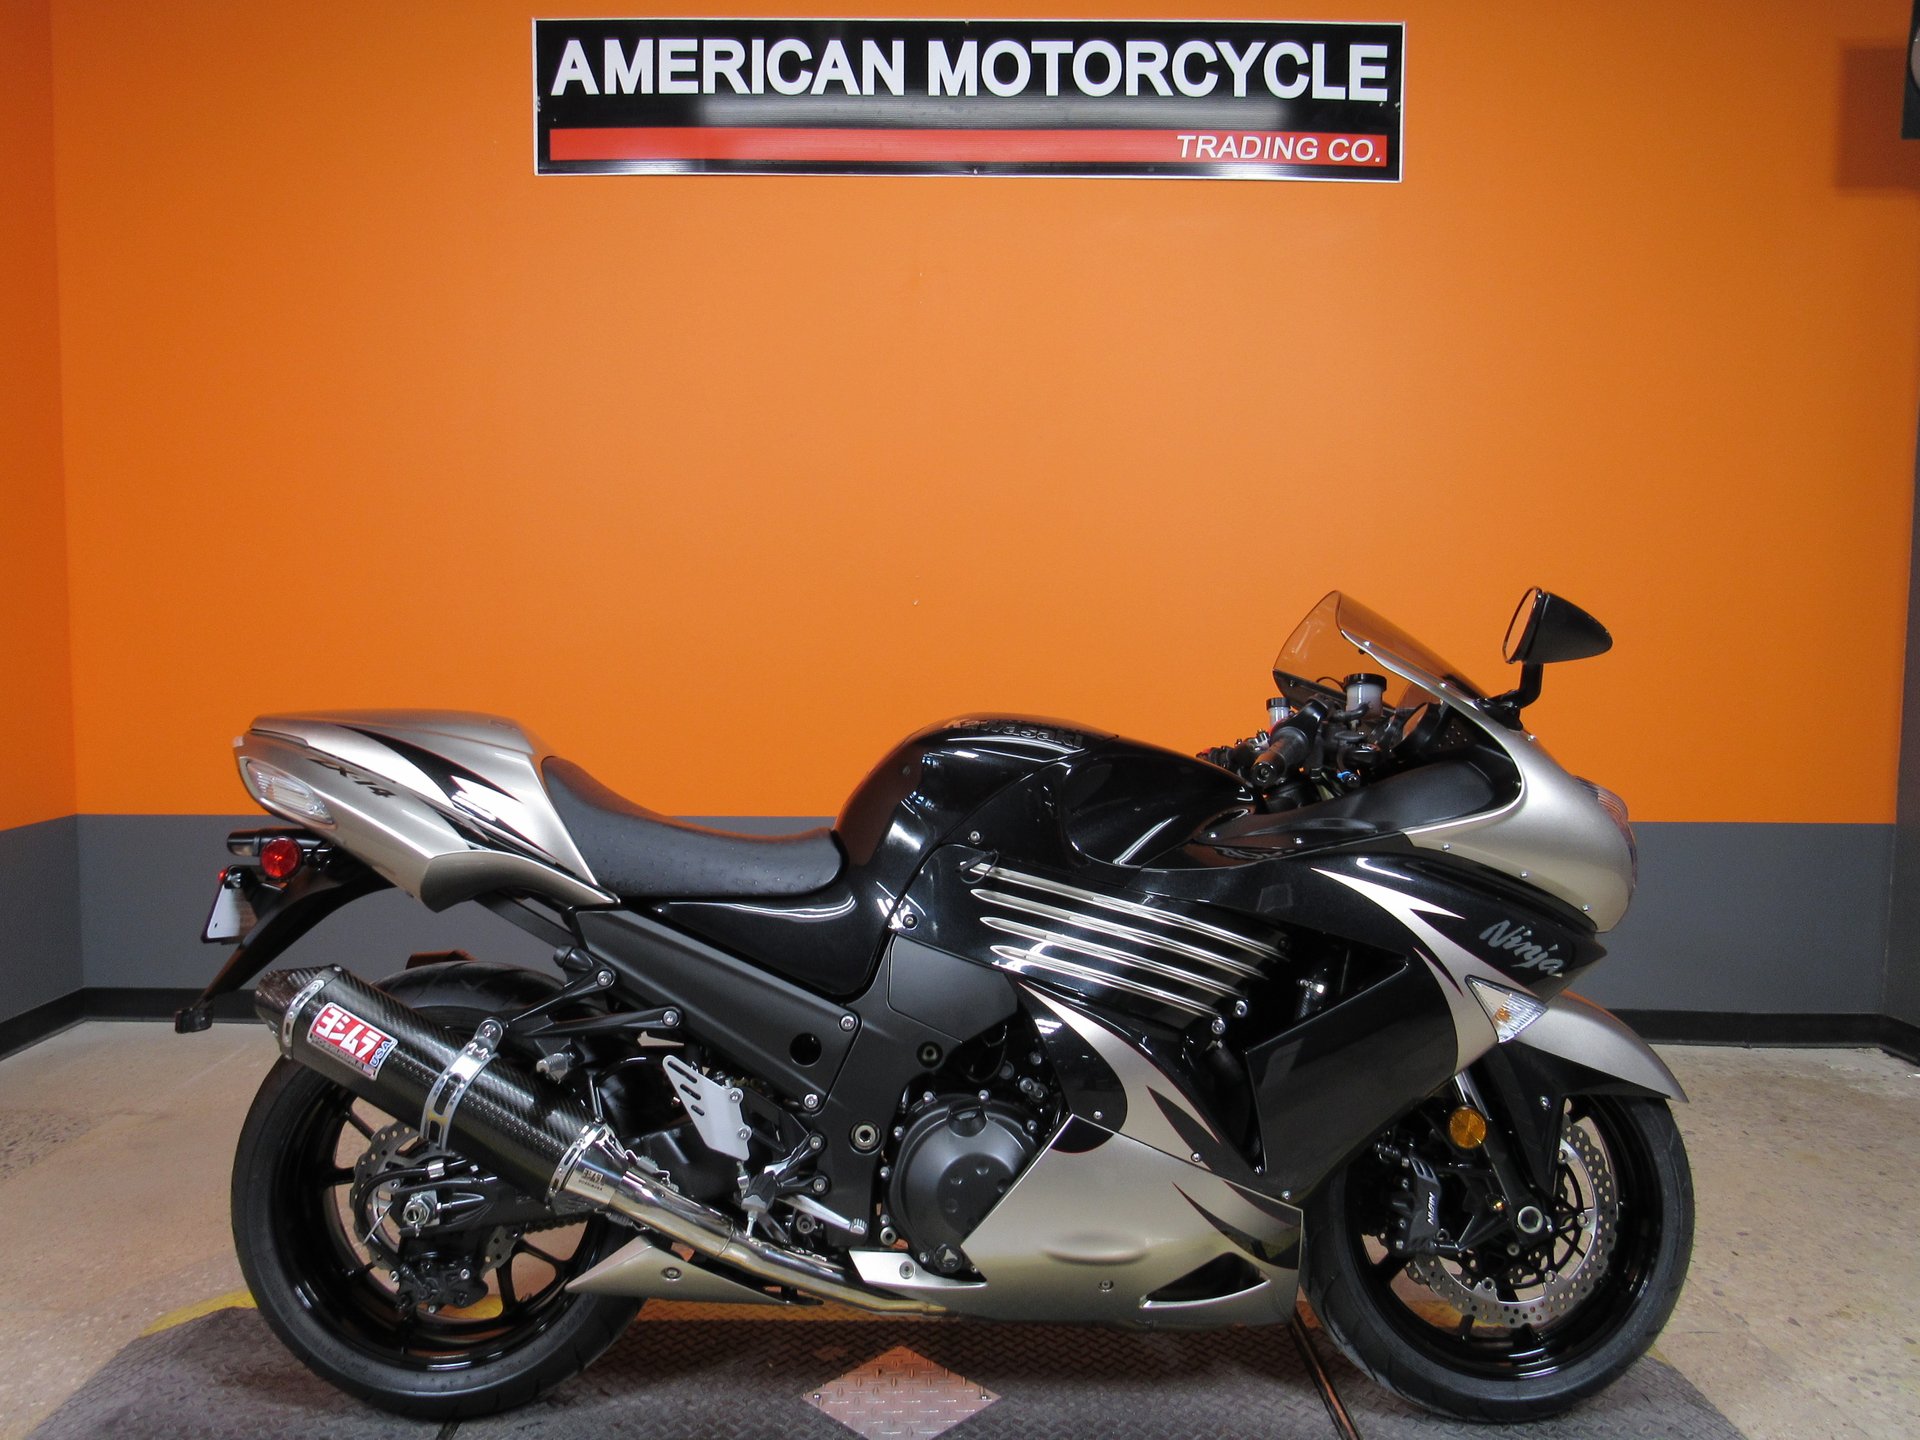 2010 Kawasaki Ninja | American Motorcycle Trading Company - Used 